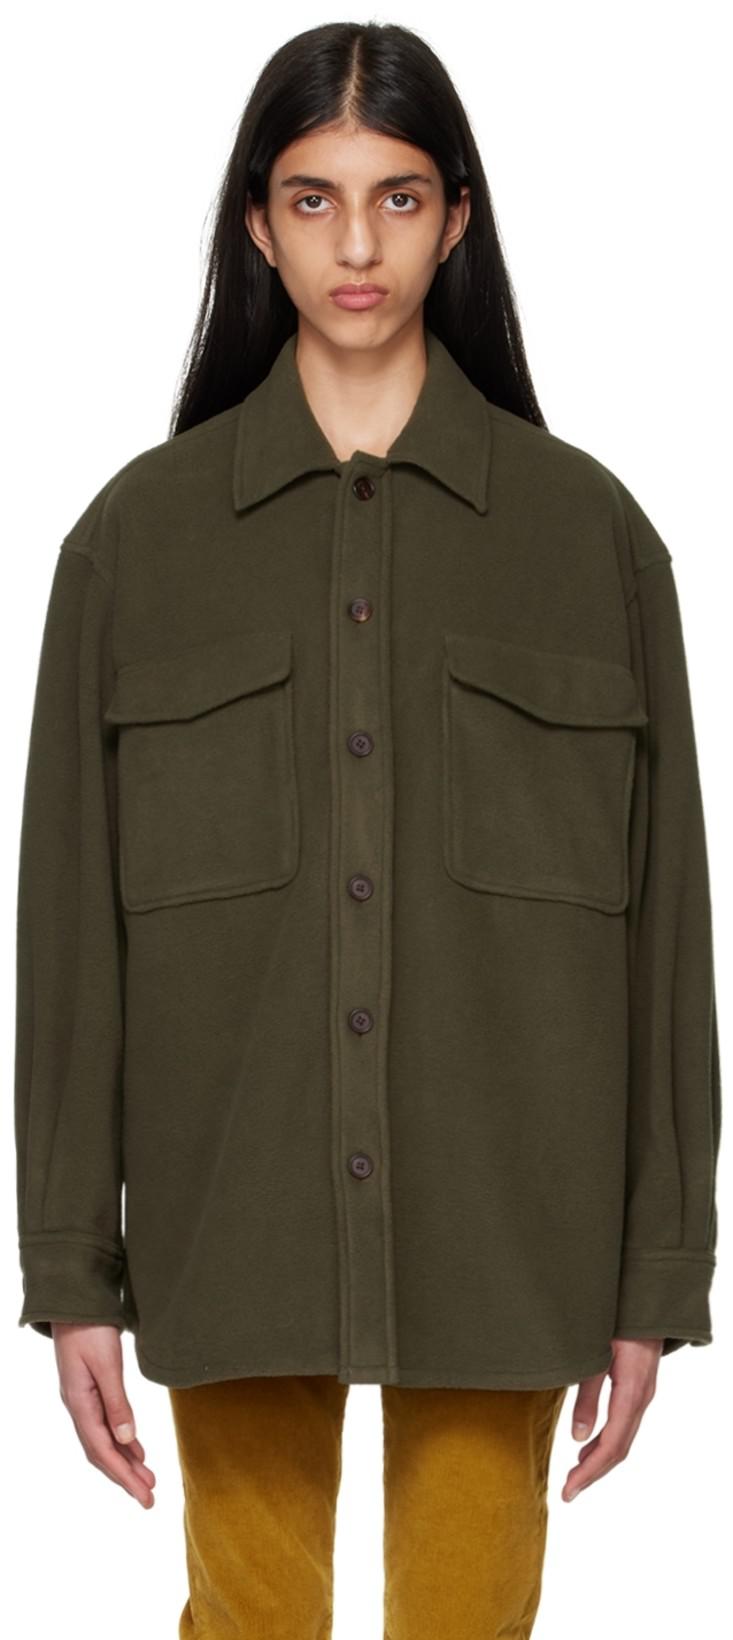 Khaki Polyester Jacket by 6397